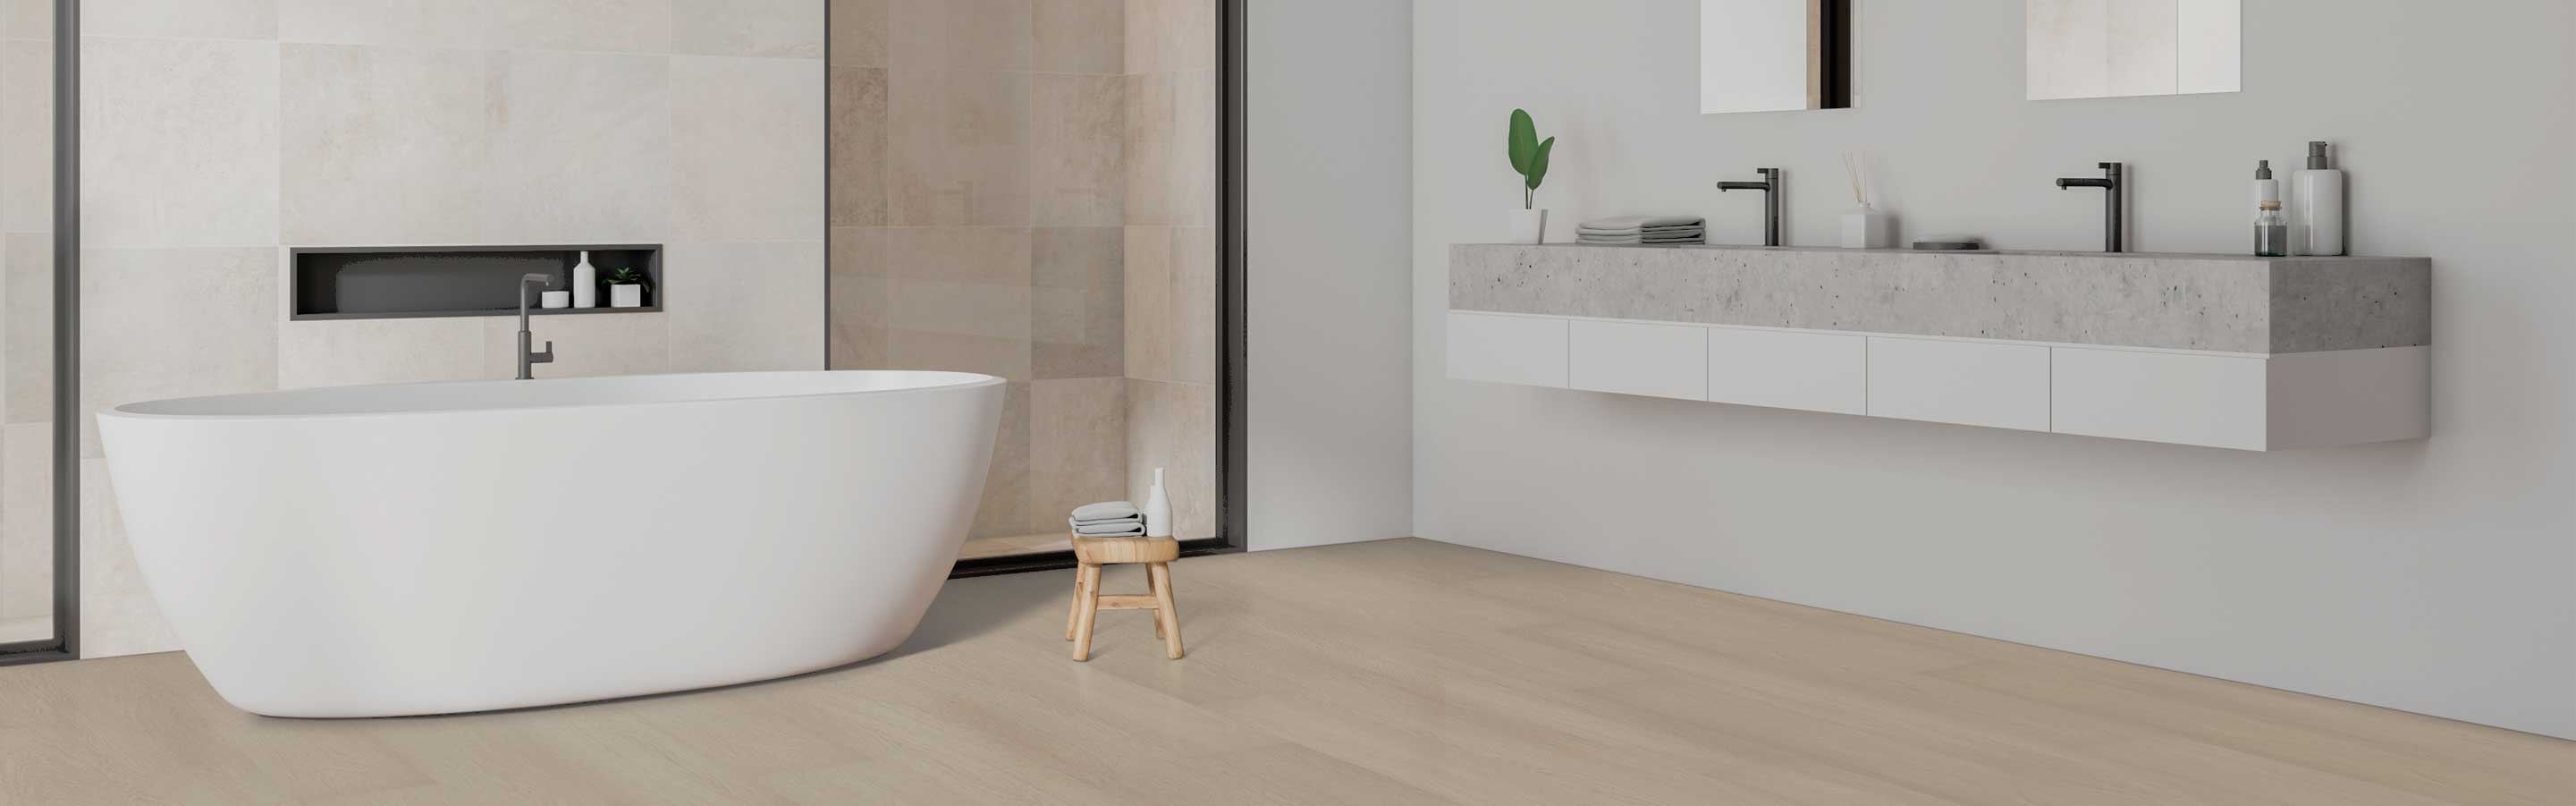 modern bathroom design with wood look flooring